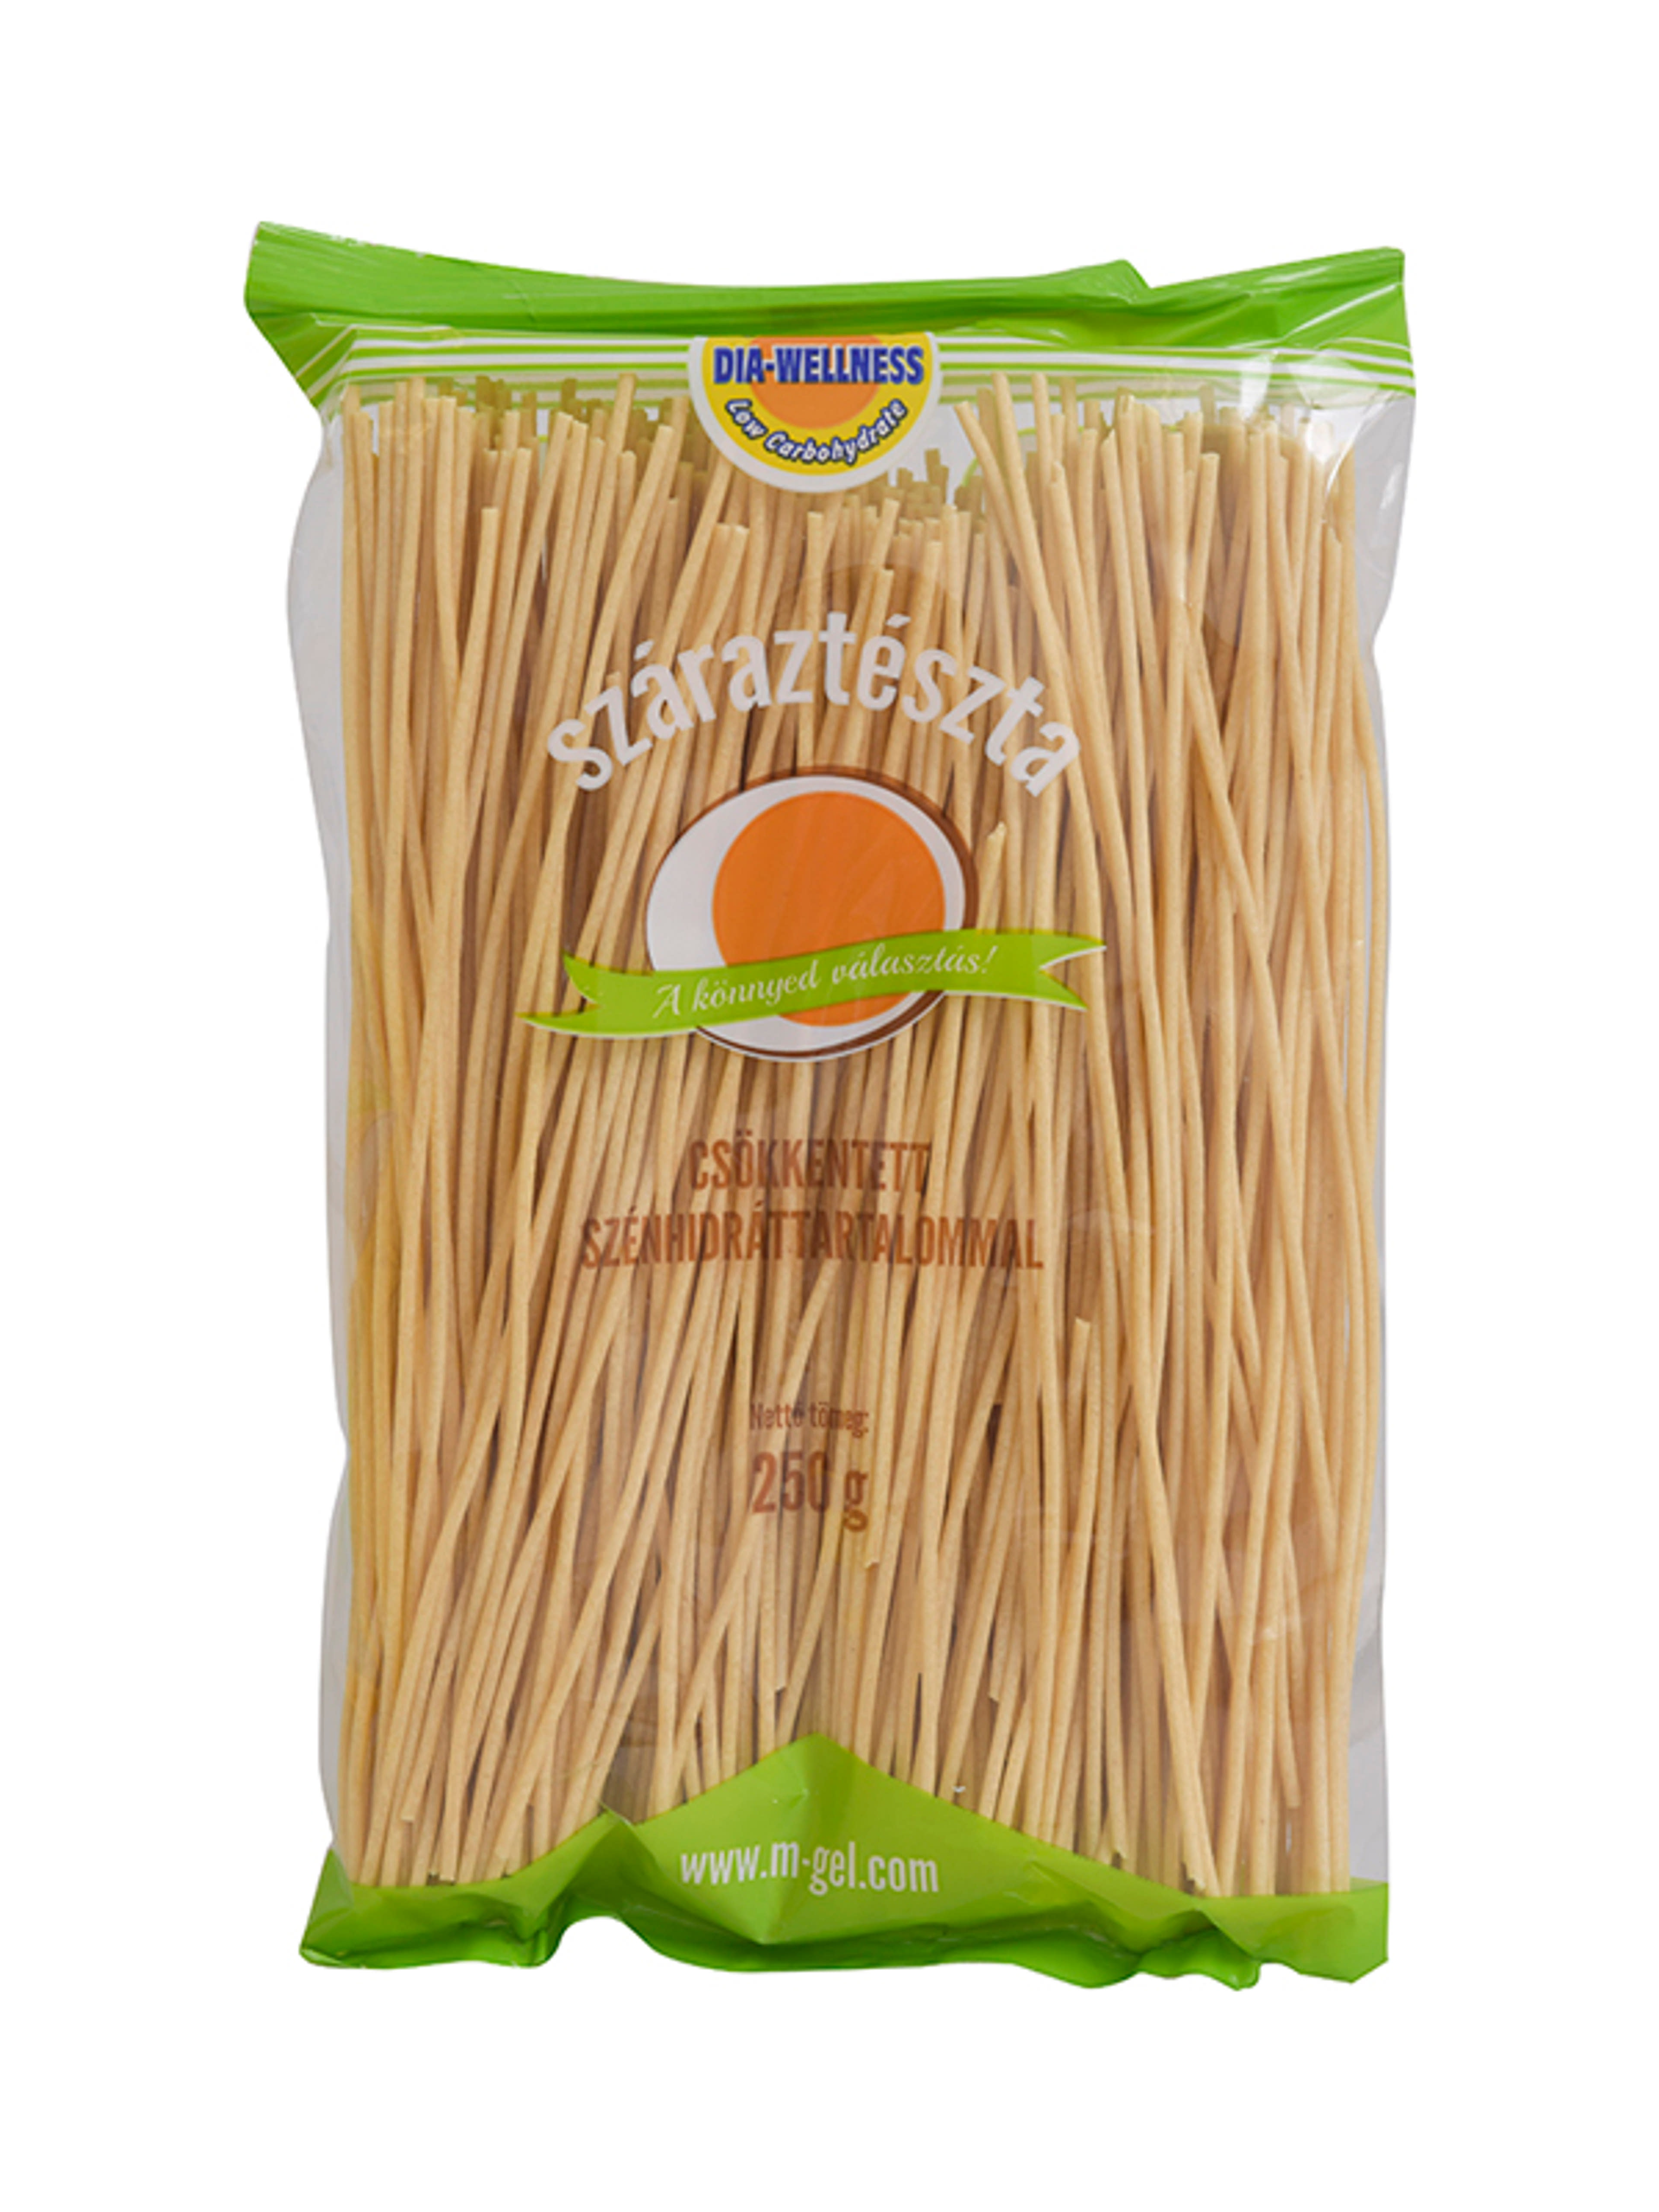 Dia-wellness spagetti szénhidrát csökkentett - 250 g-1